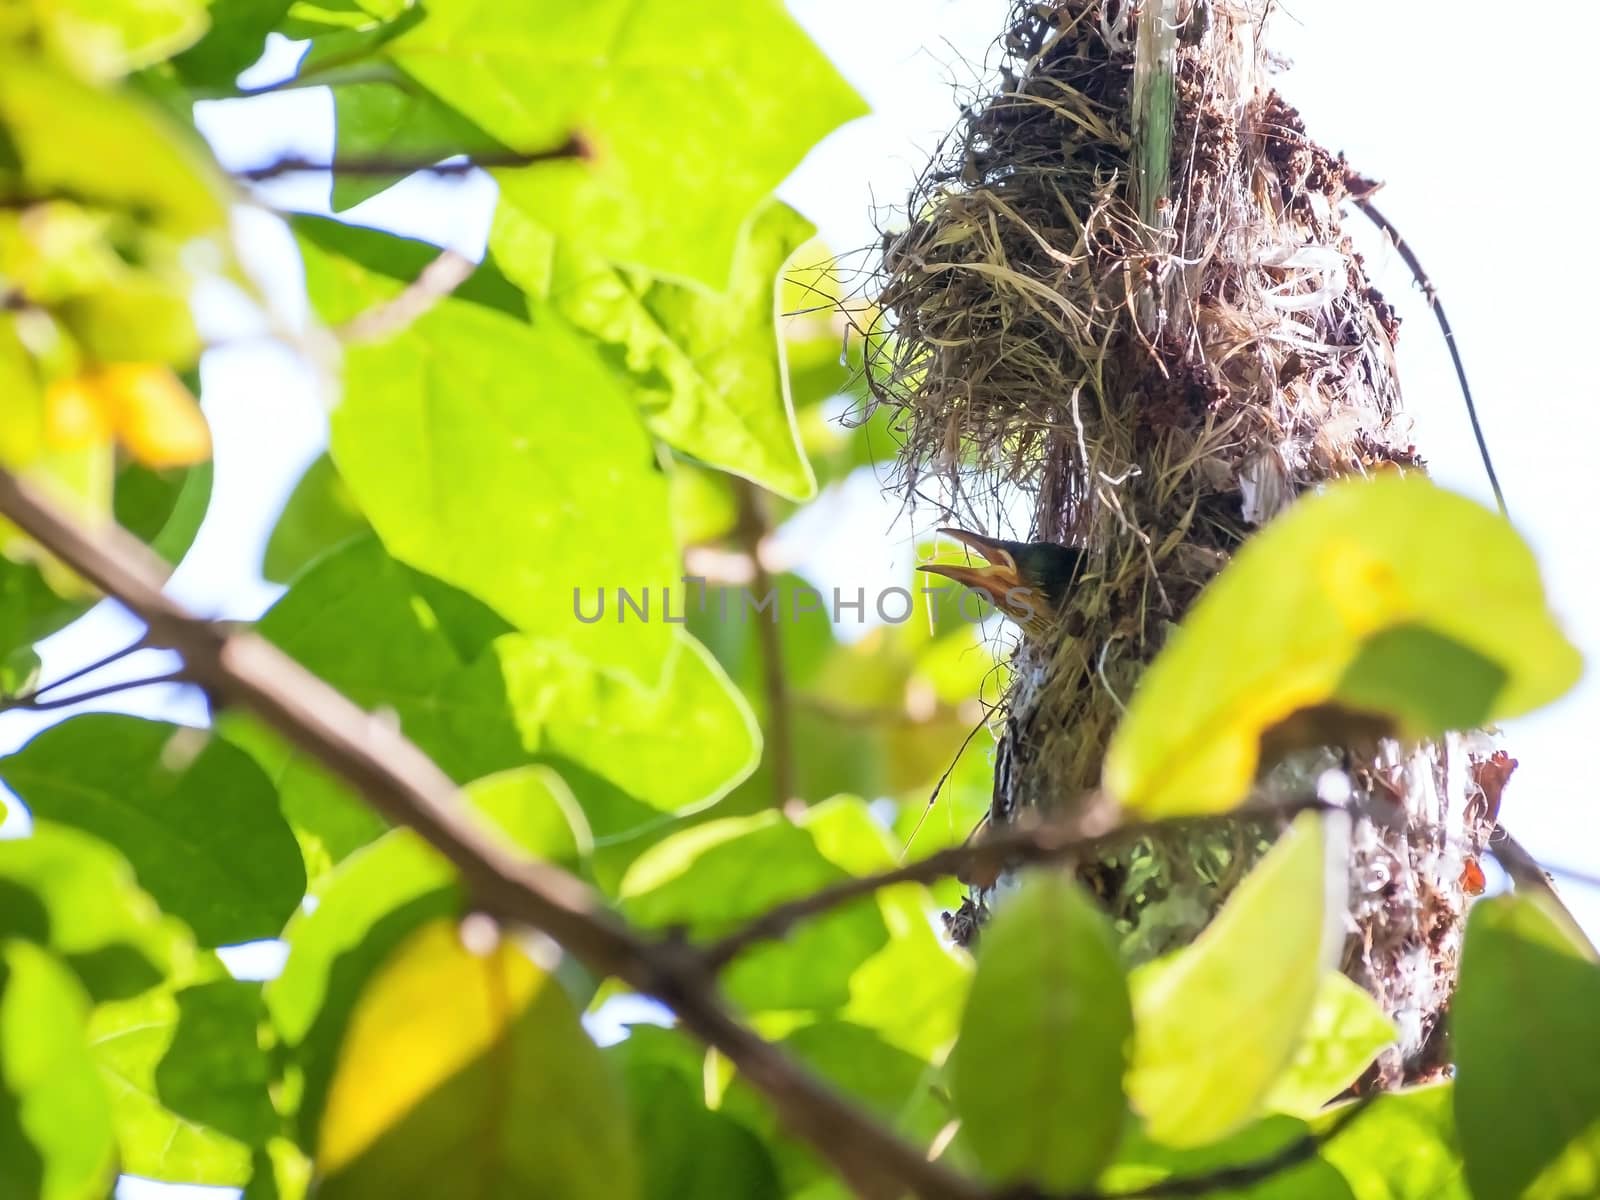 Olive-backed sunbird nestling wait for mother in nest. Cinnyris jugularis, Family Nectariniidae, synonyms Black-breasted Sunbird, Black-throated Sunbird, Olive backed Sunbird, Yellow-bellied Sunbird, Yellow-breasted Sunbird